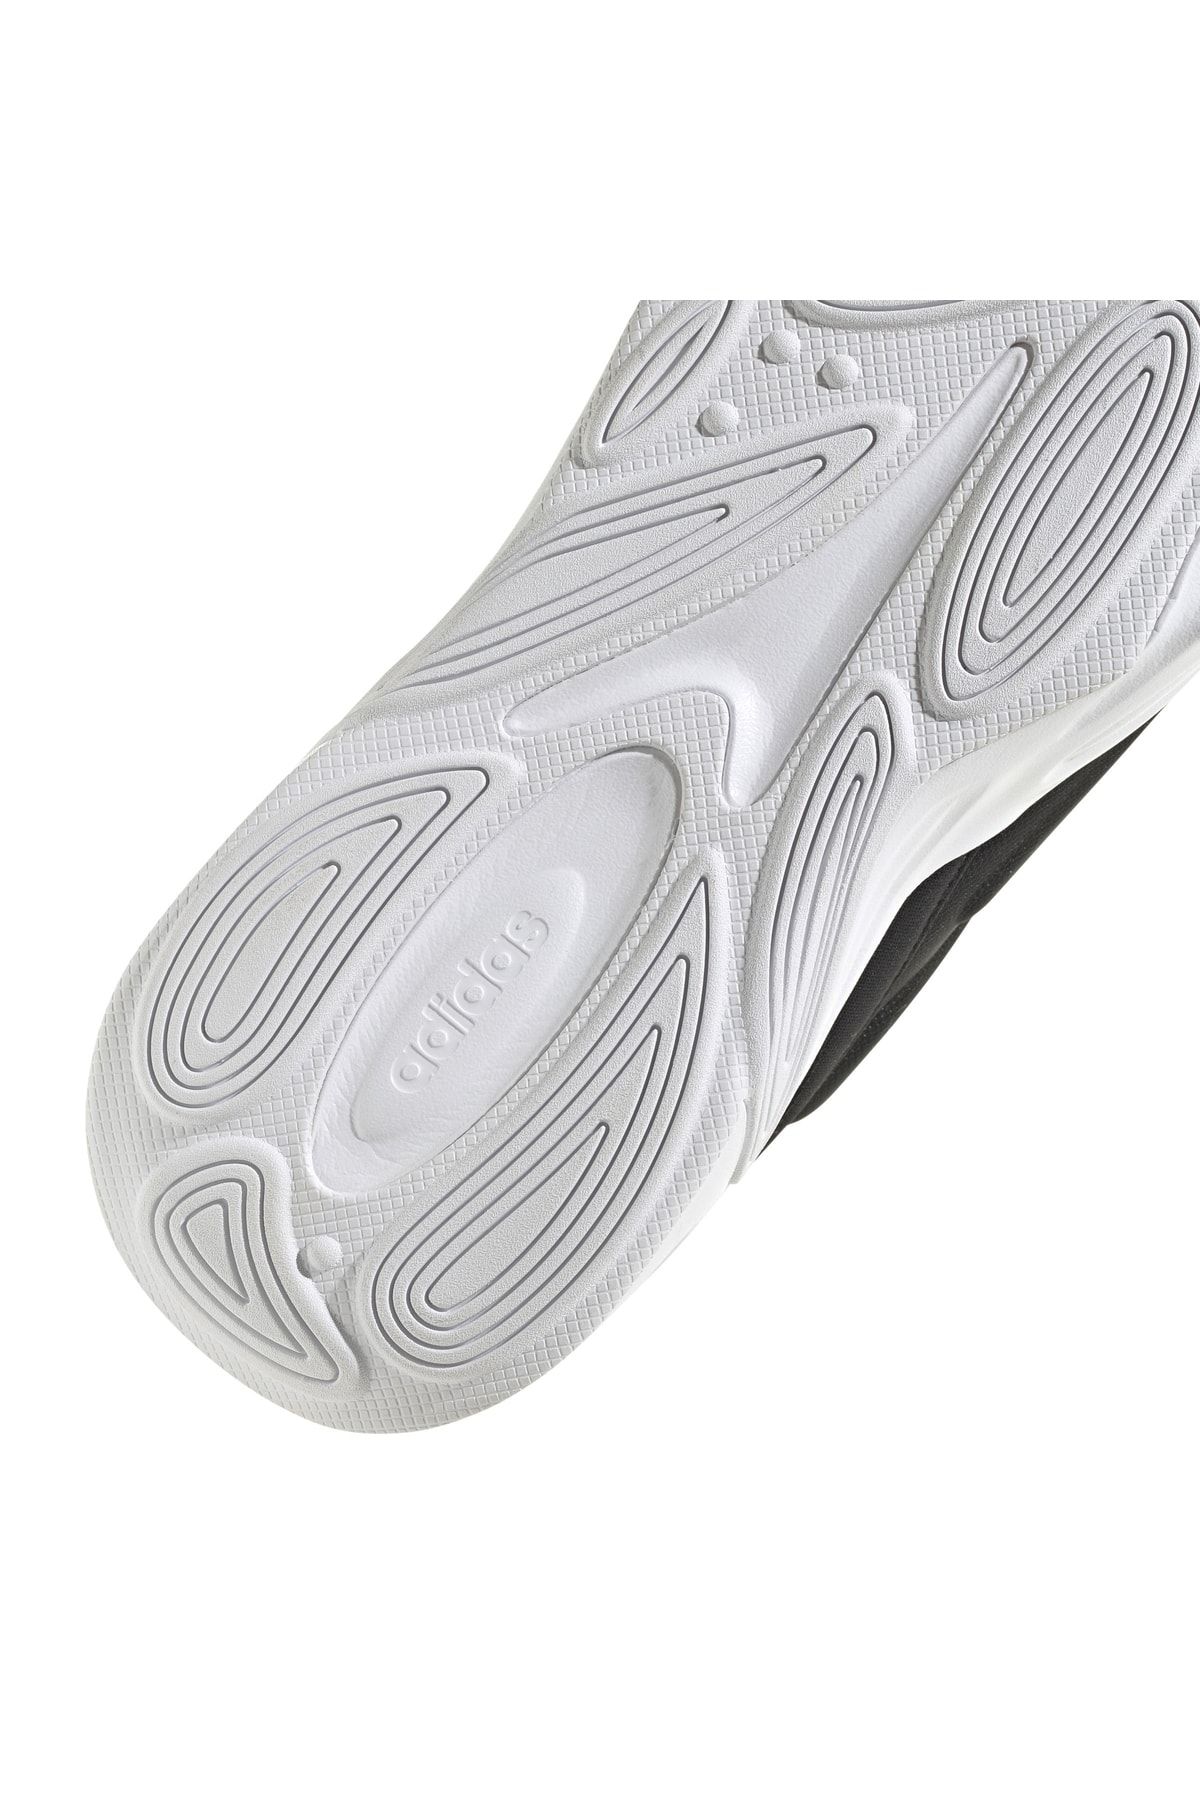 کفش كتانى ورزشى مدل Ozelle Cloudfoam مردانه آدیداس Adidas